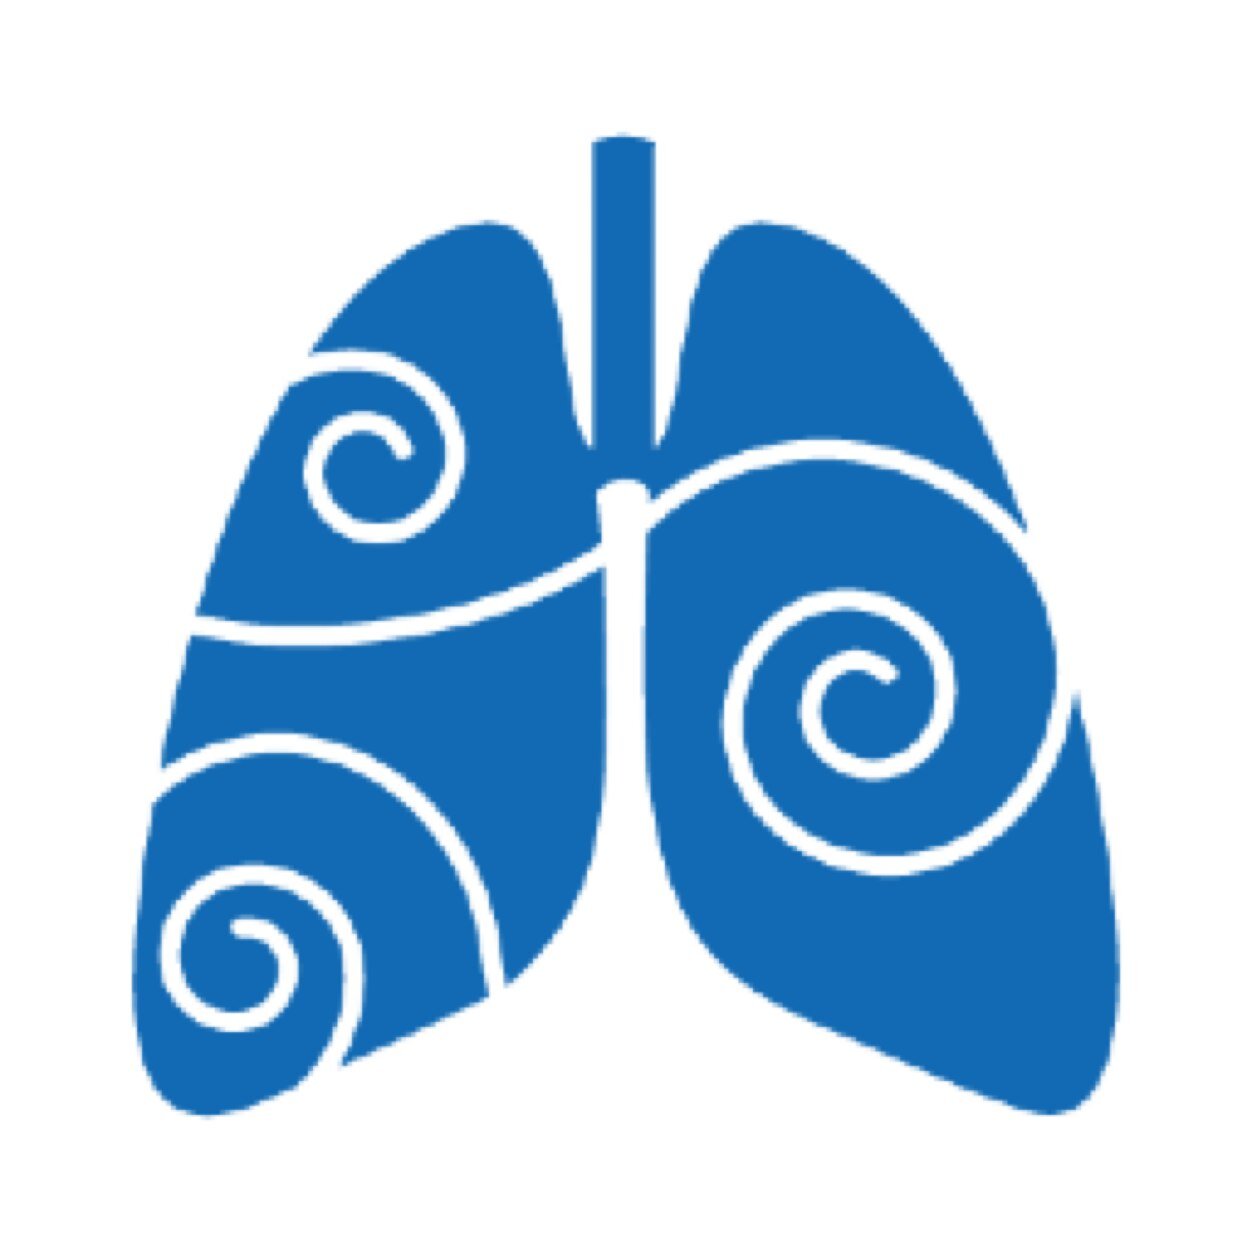 lung cancer logo clip art free - photo #1